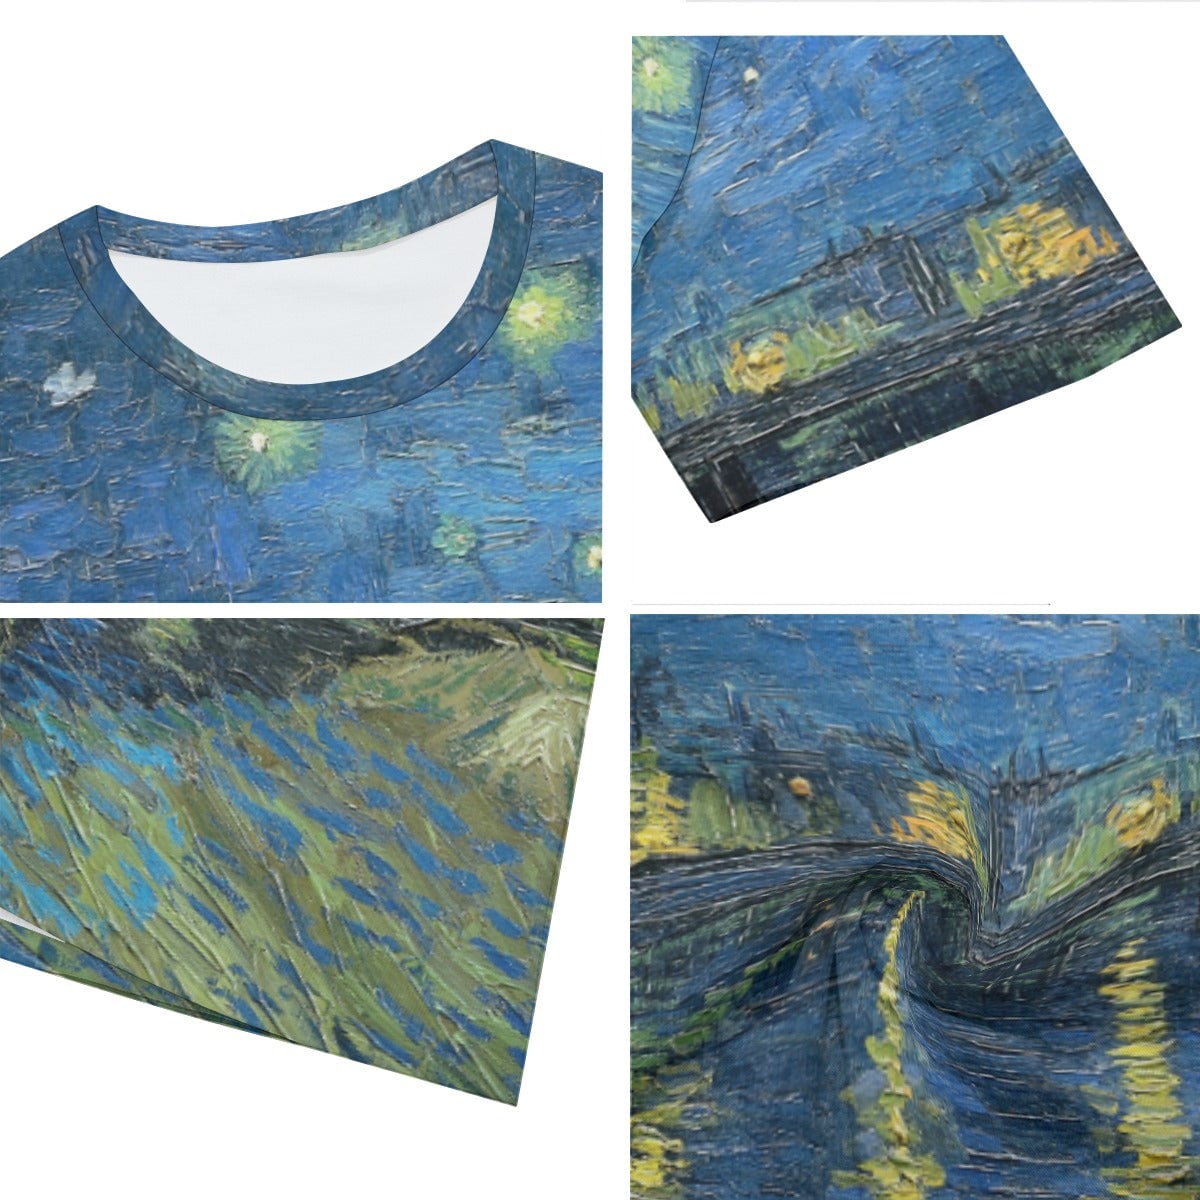 Starry Night Over the Rhone Van Gogh T-Shirt